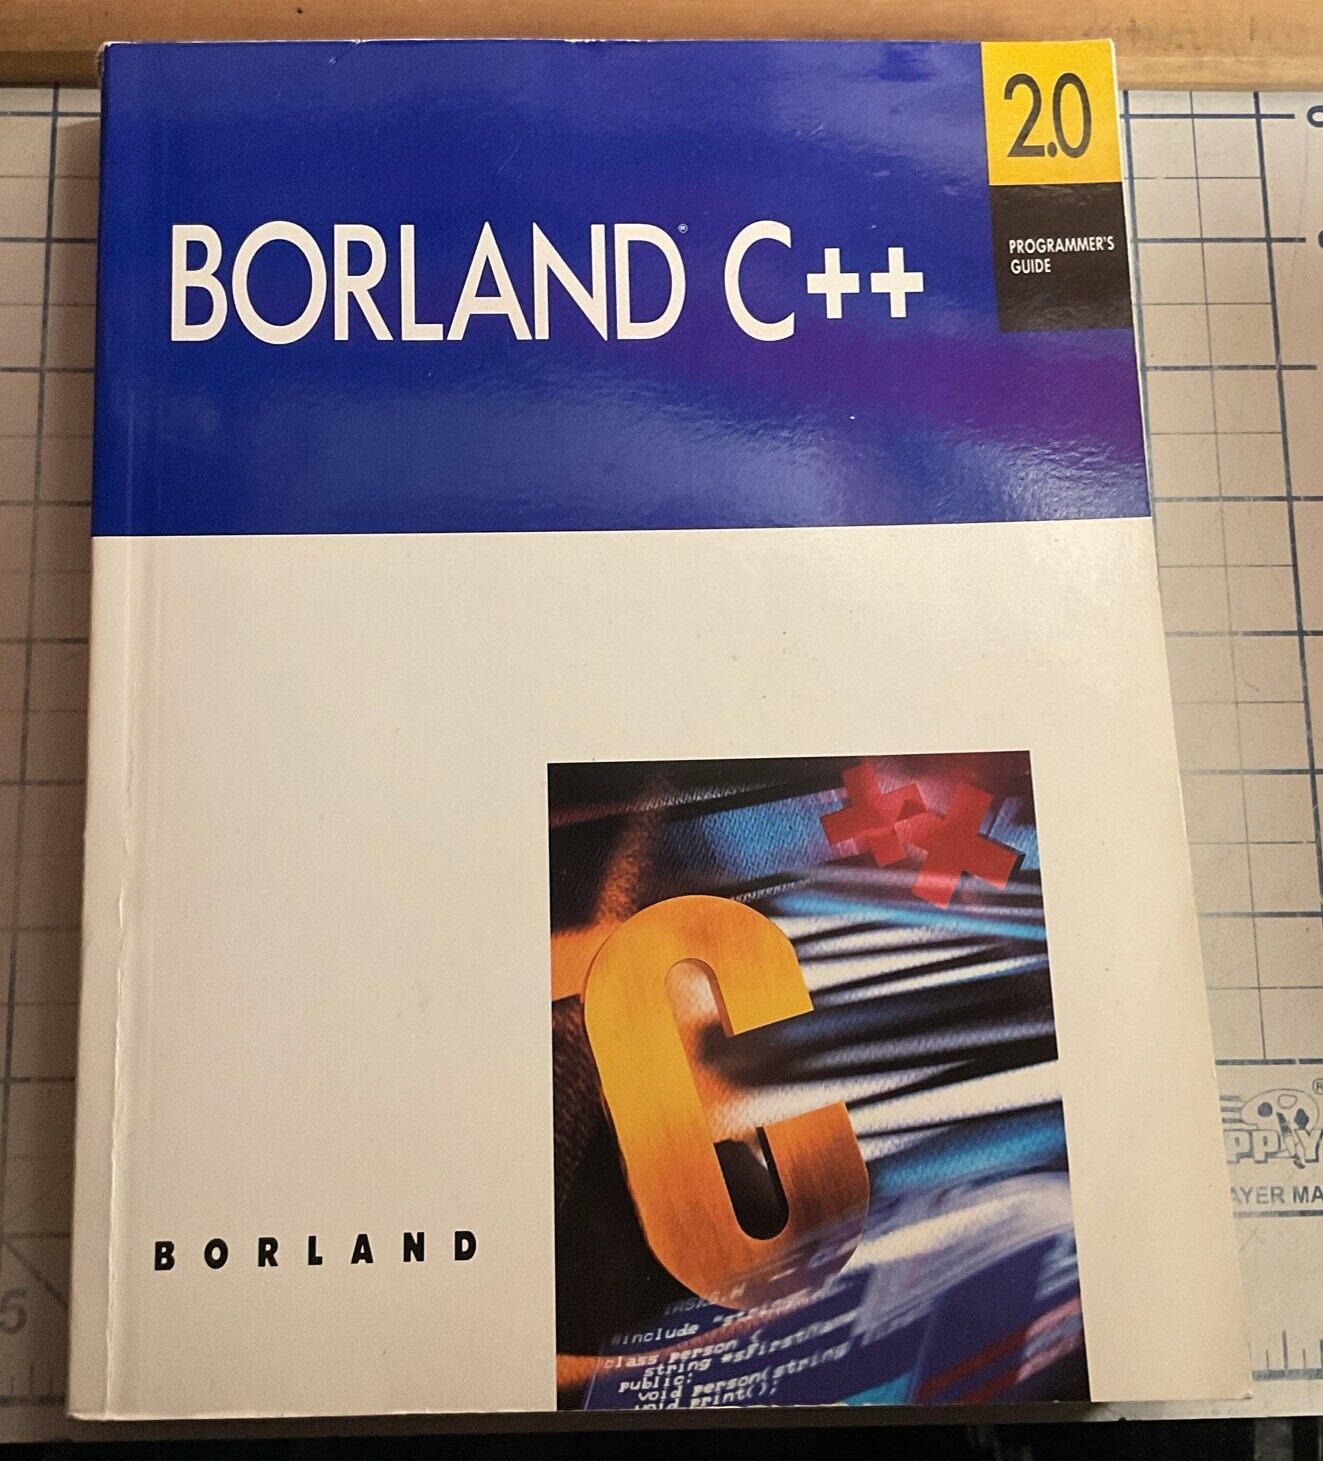 BORLAND C++ 2.0 for DOS “ Programmer’s Guide”